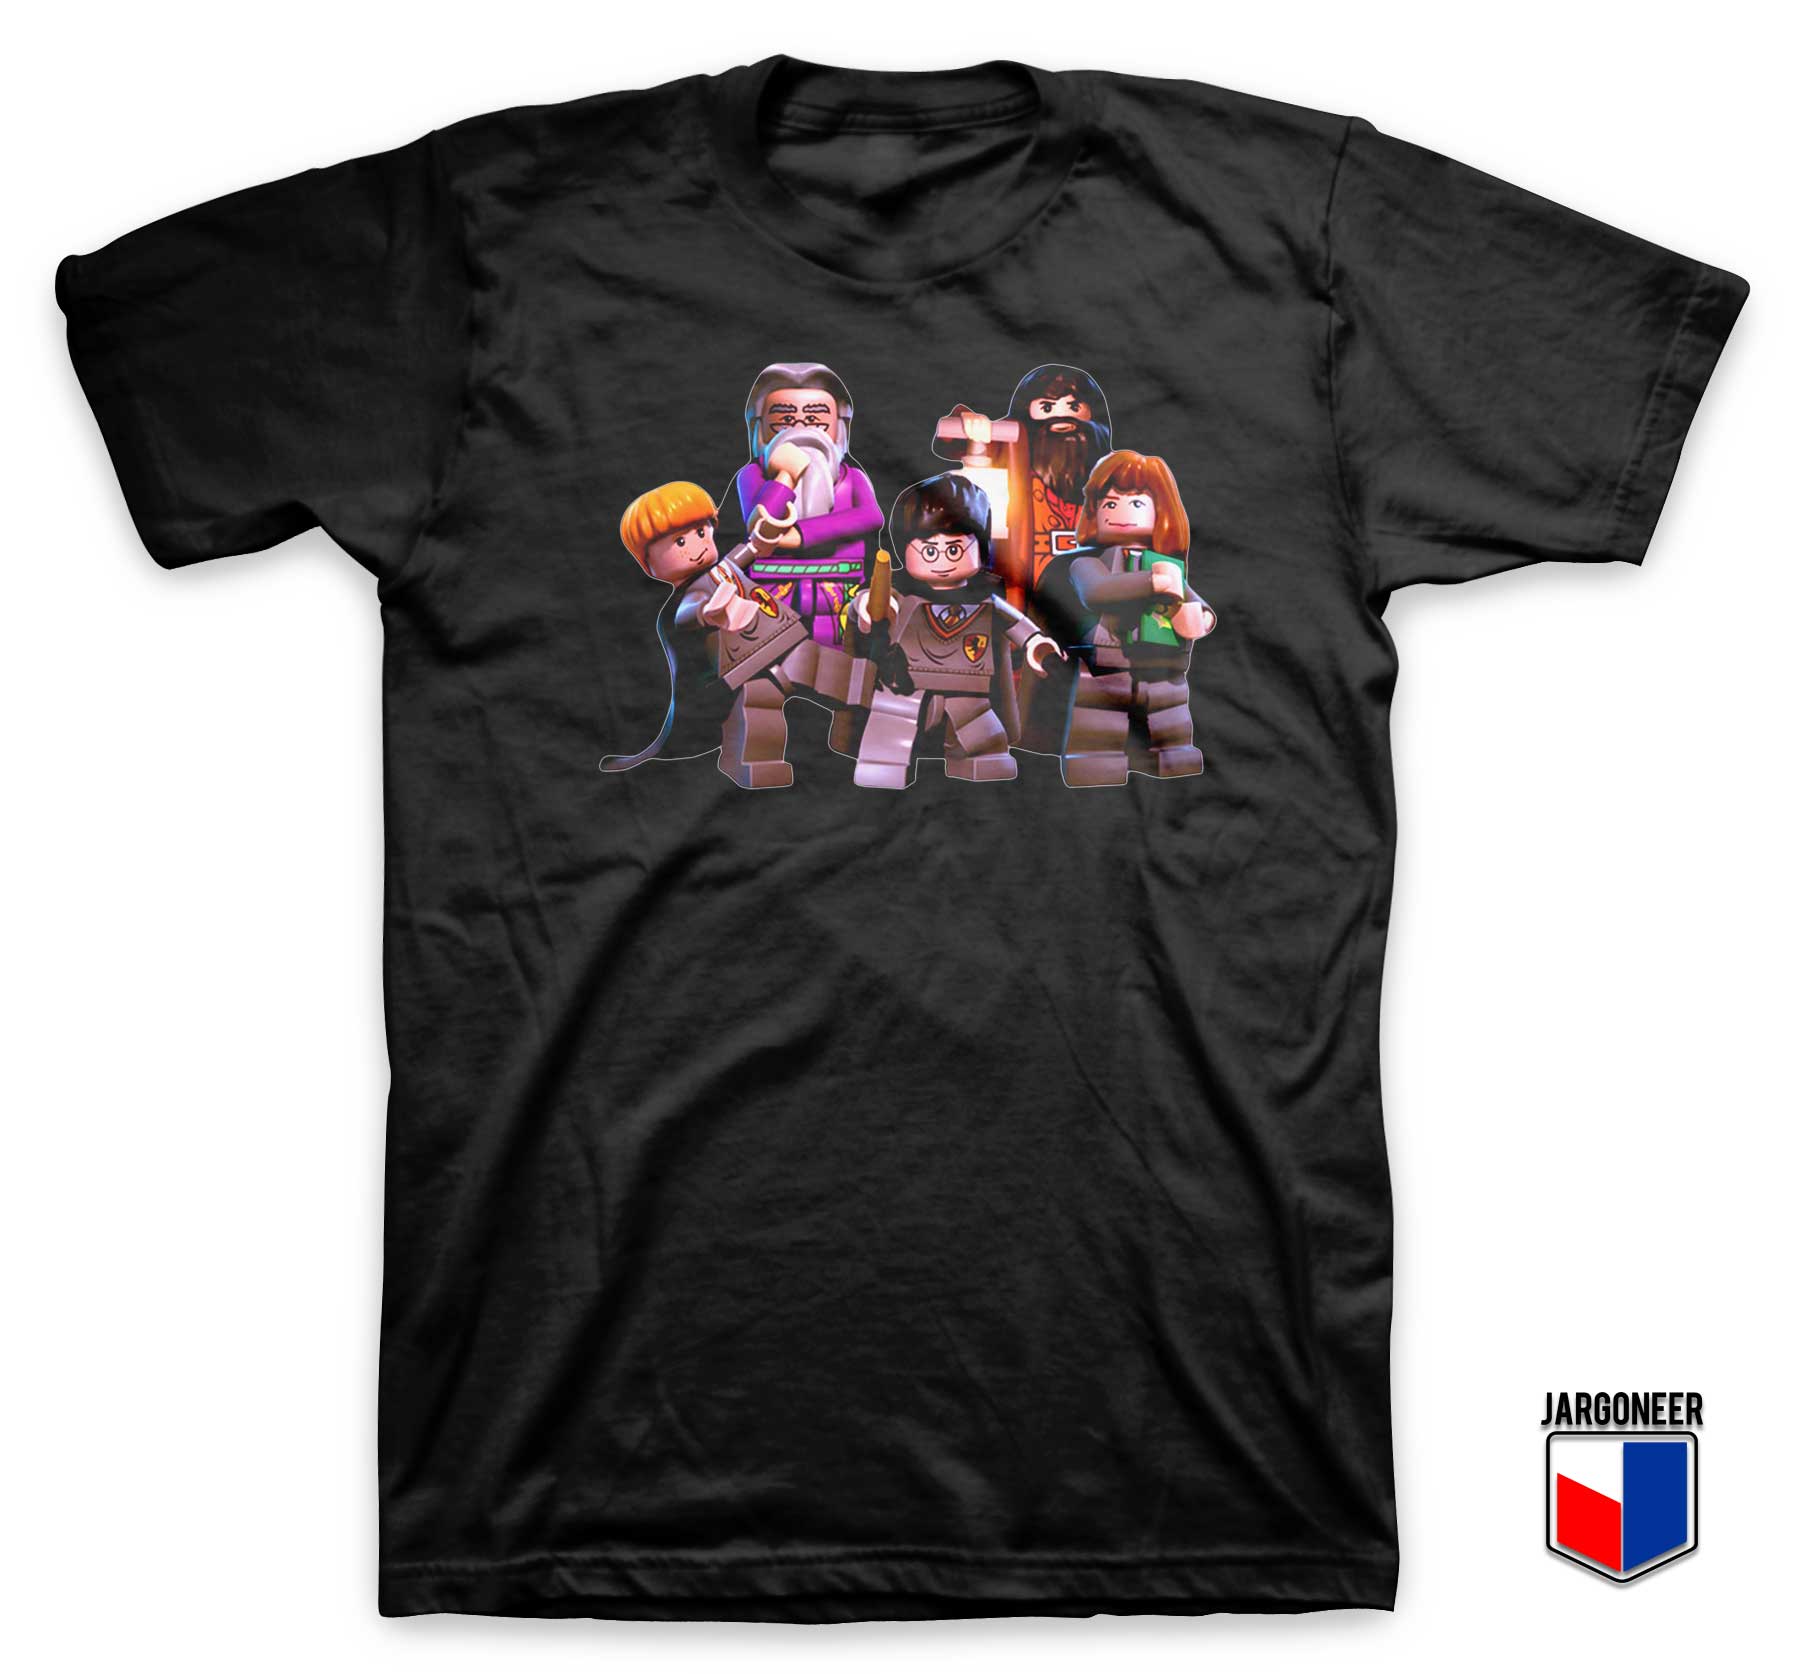 Harry Potter Lego Evolution Boys Girls Kids T-Shirt Brand New Funny Cool Gift 